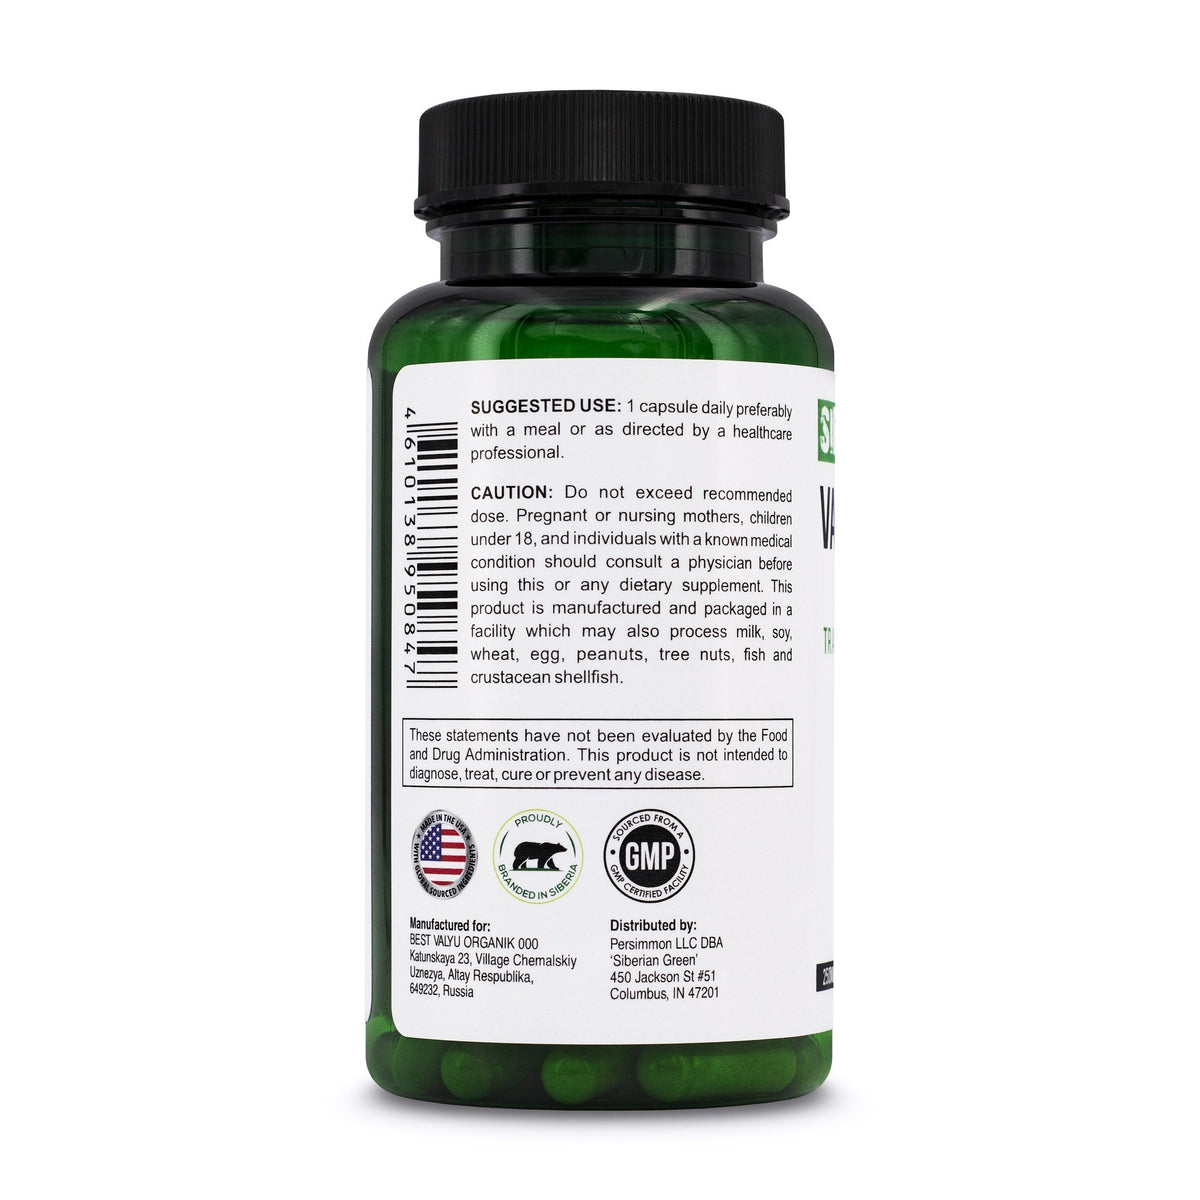 Siberian Green Valerian Root 60 Caps - Extra Strength Valerian Extract for Calming, Sleep Support